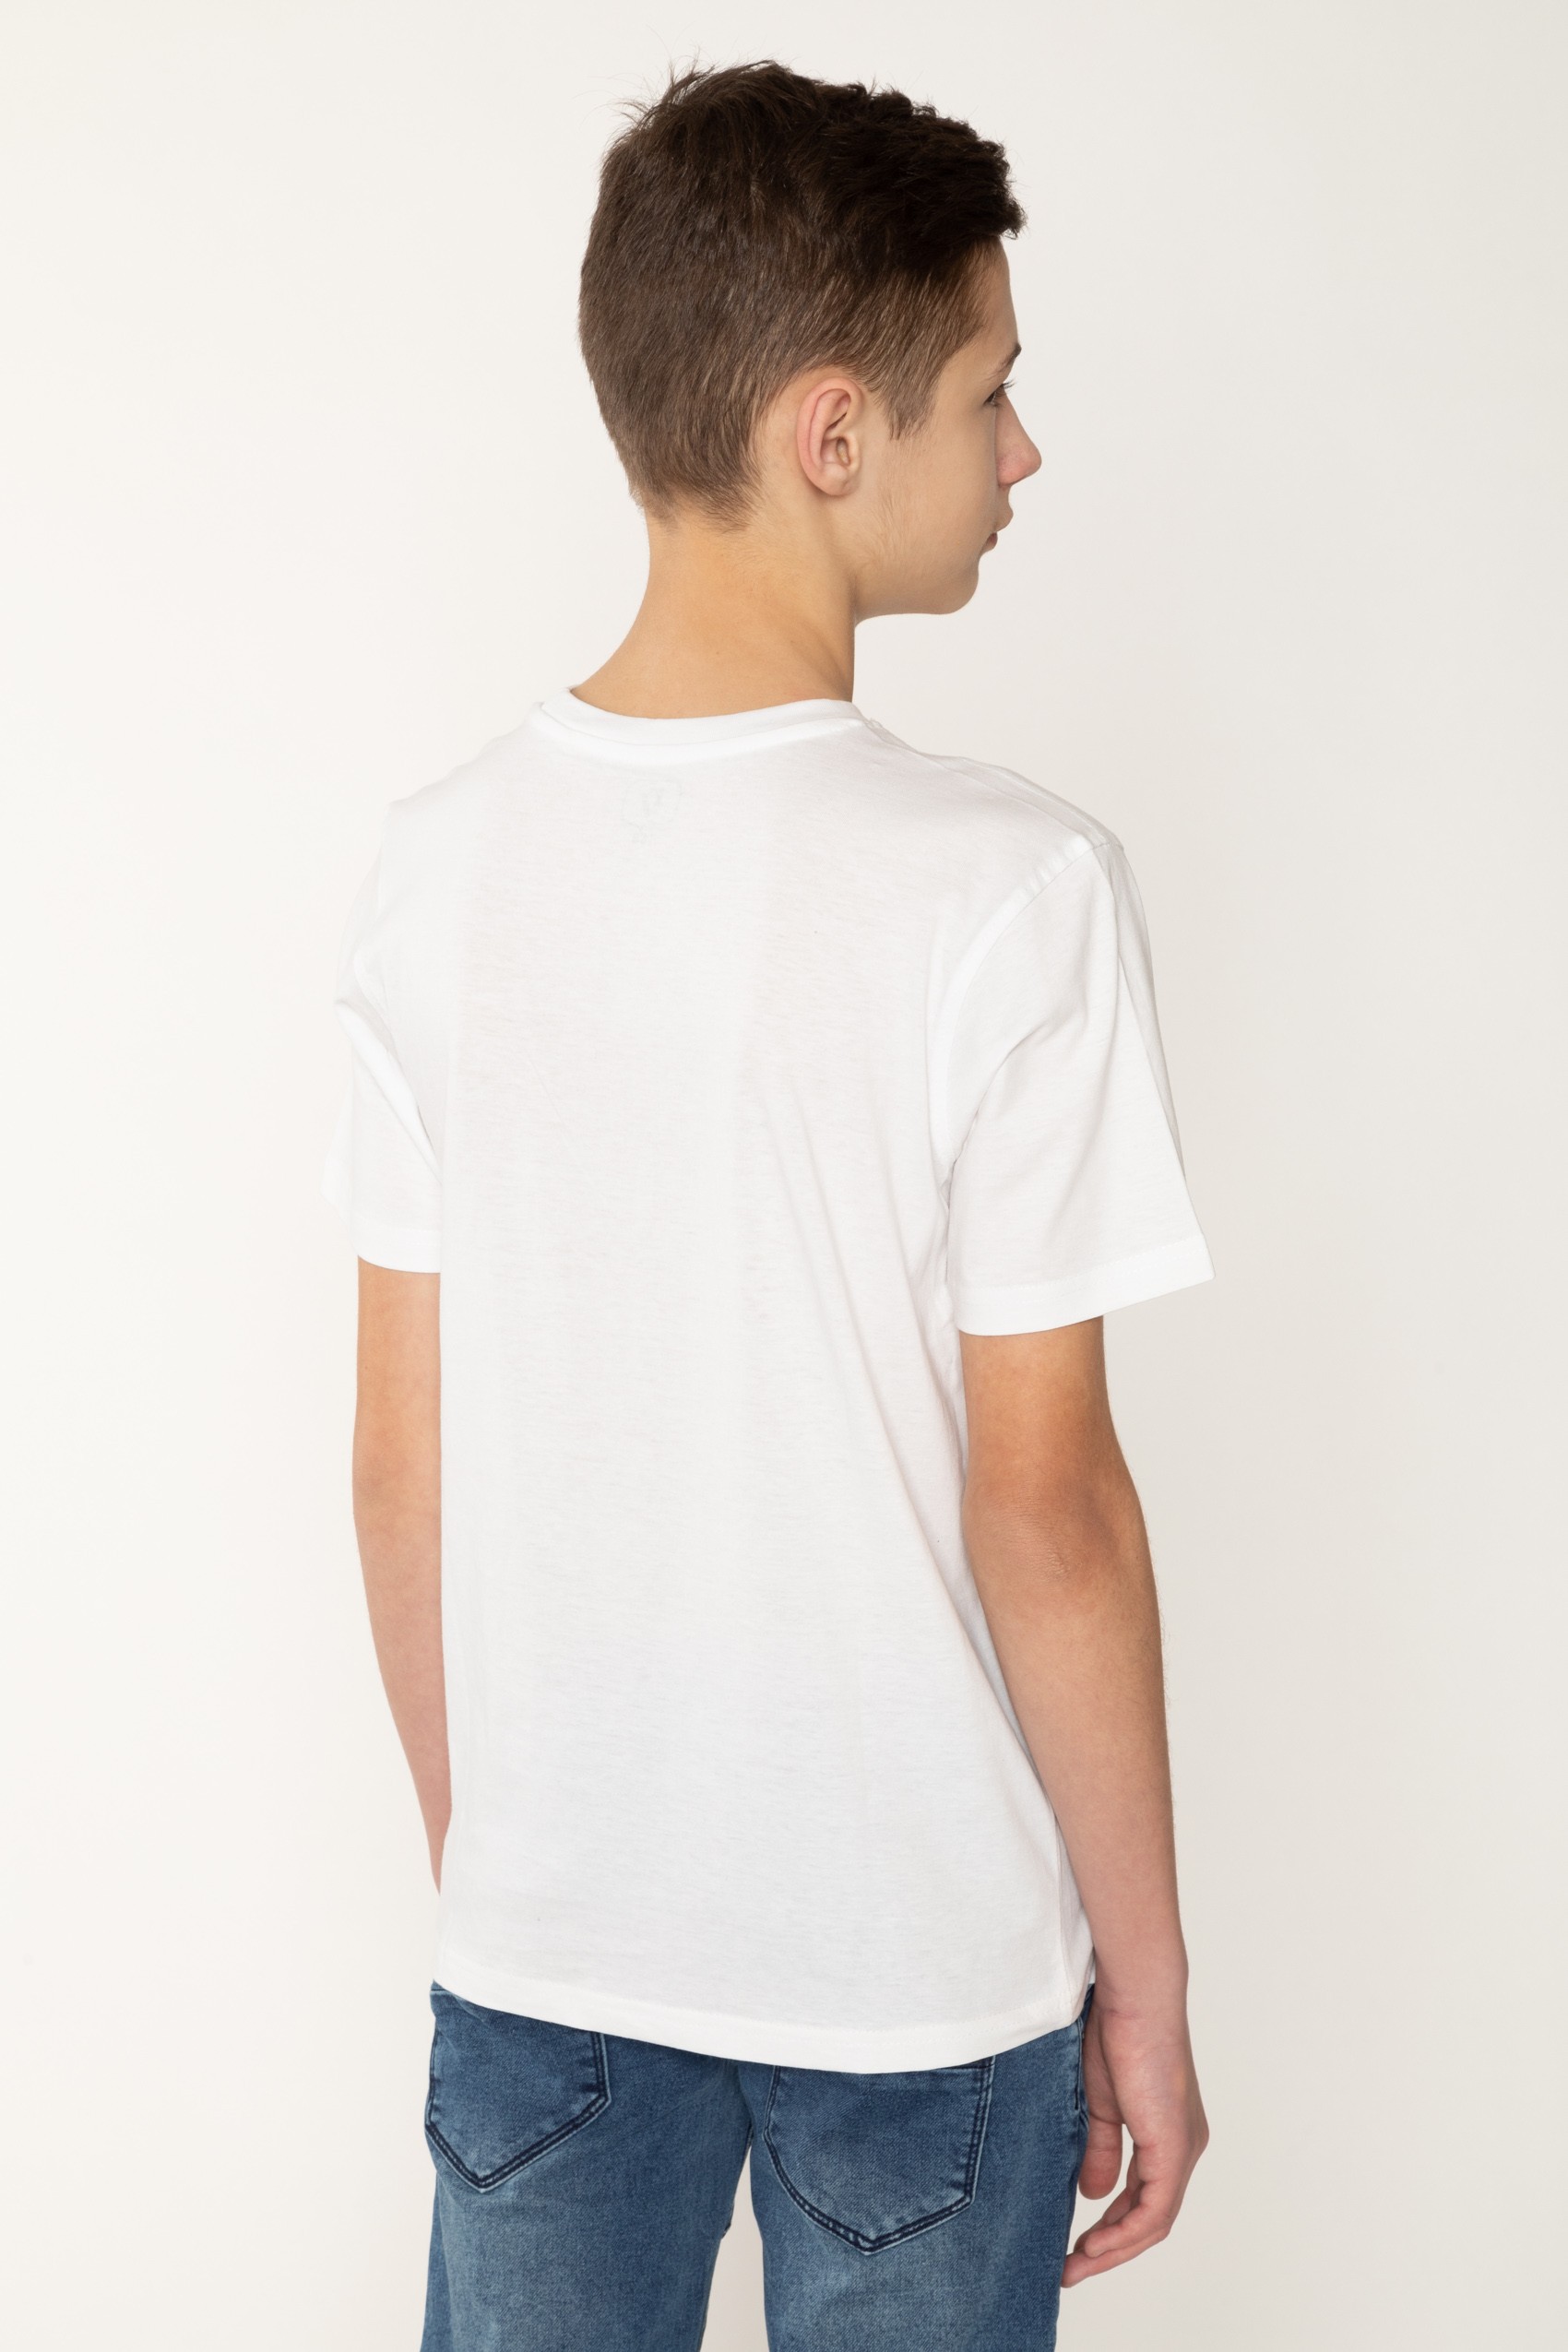 

Biały T-shirt dla chłopaka ALE LAMPA!